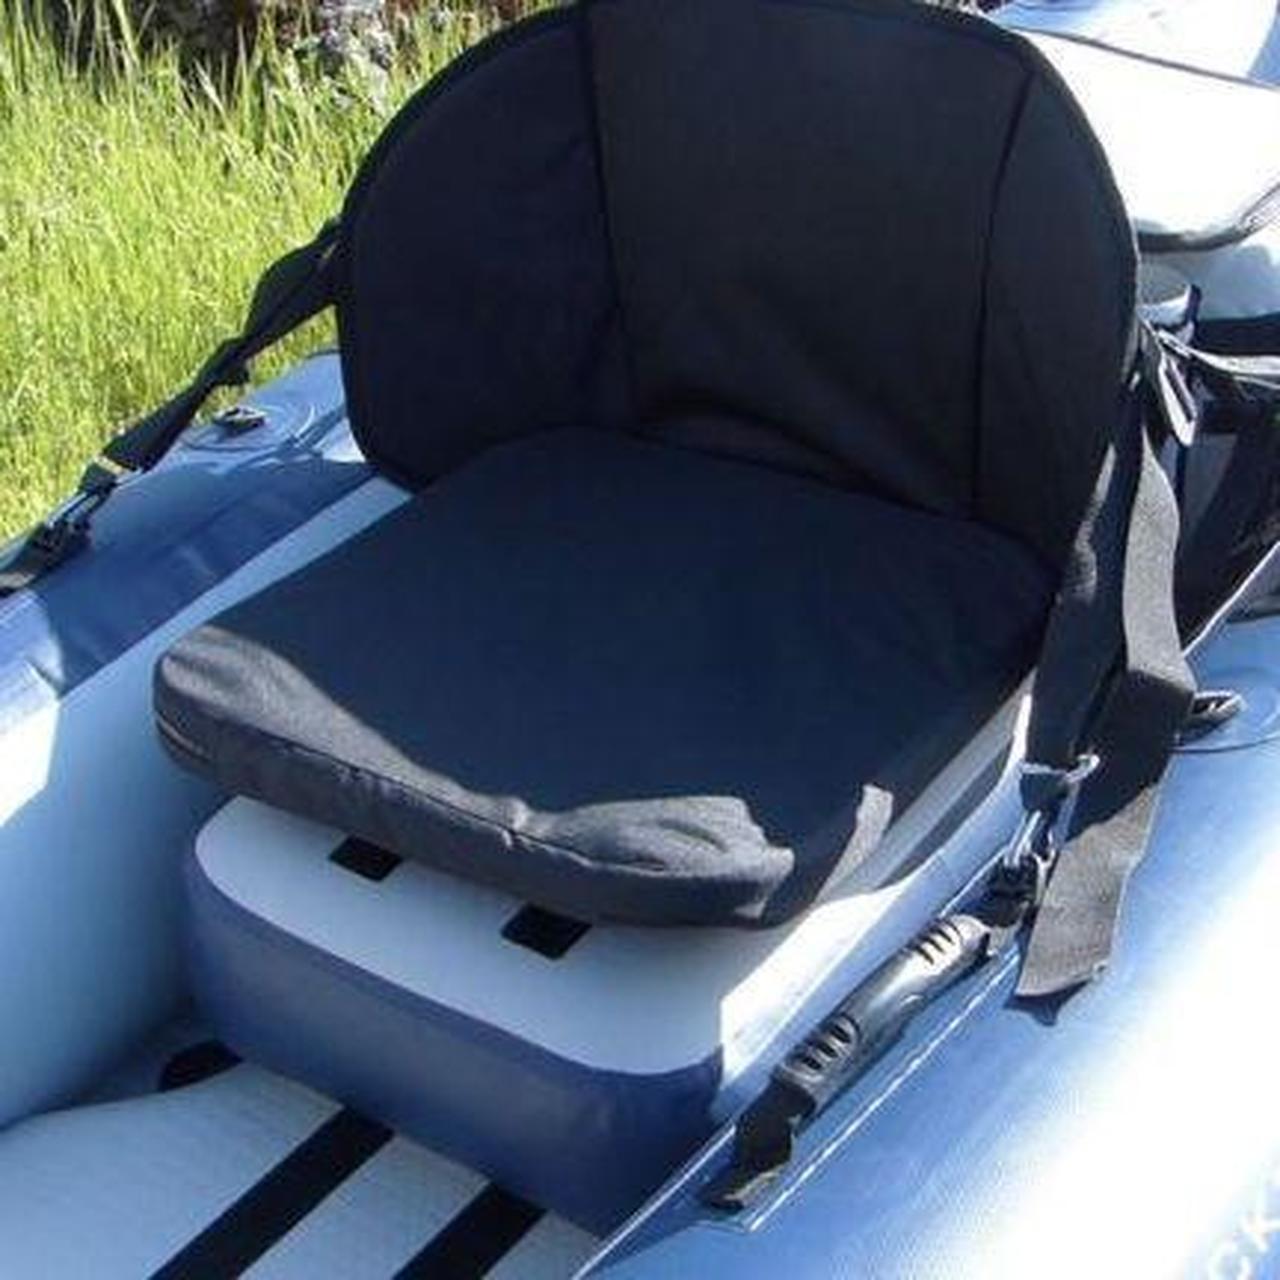 Aquaglide Seat Riser (Dropstitch Cushion)